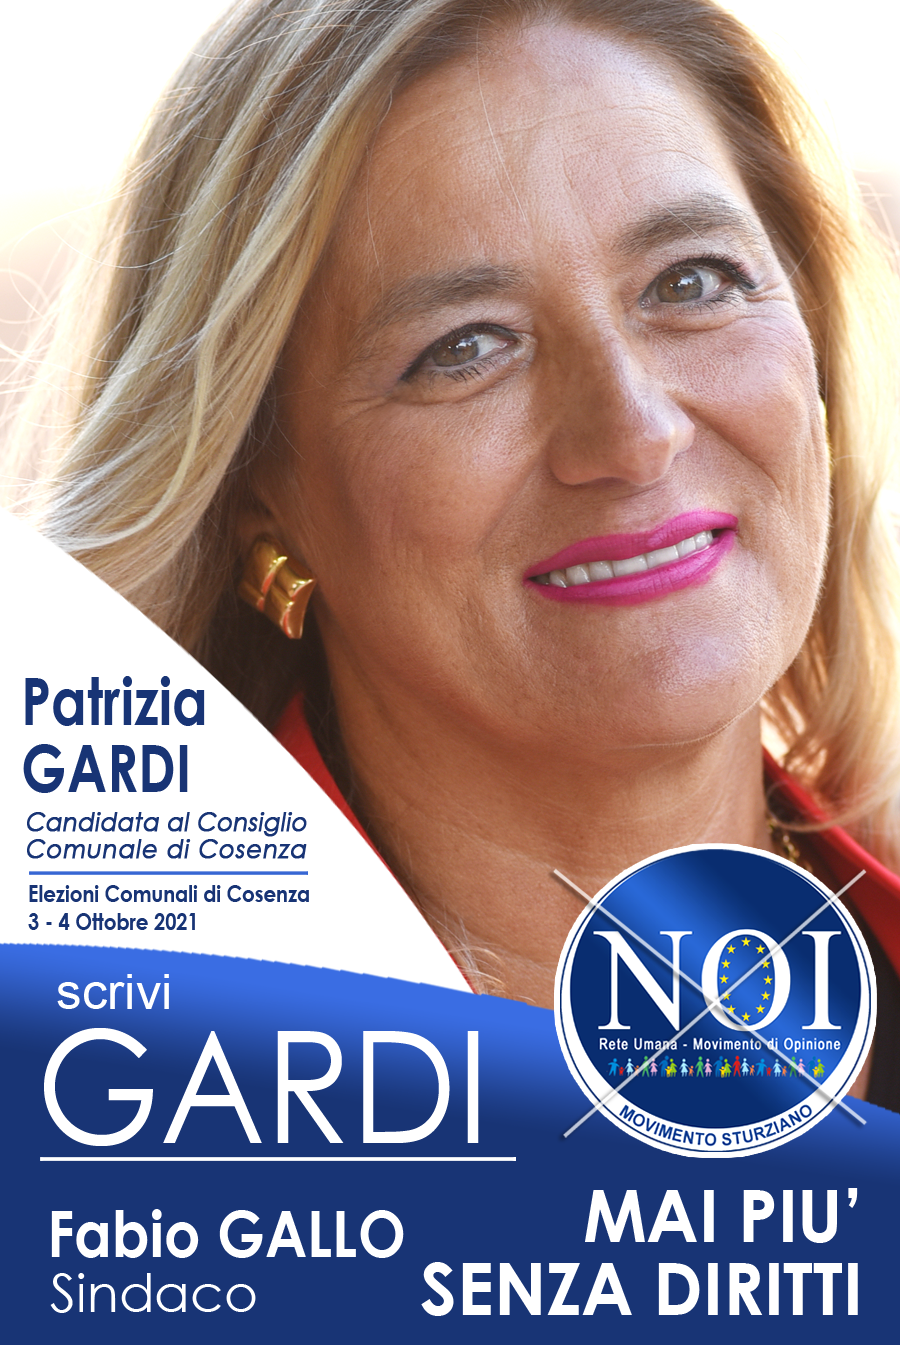 Patrizia Gardi